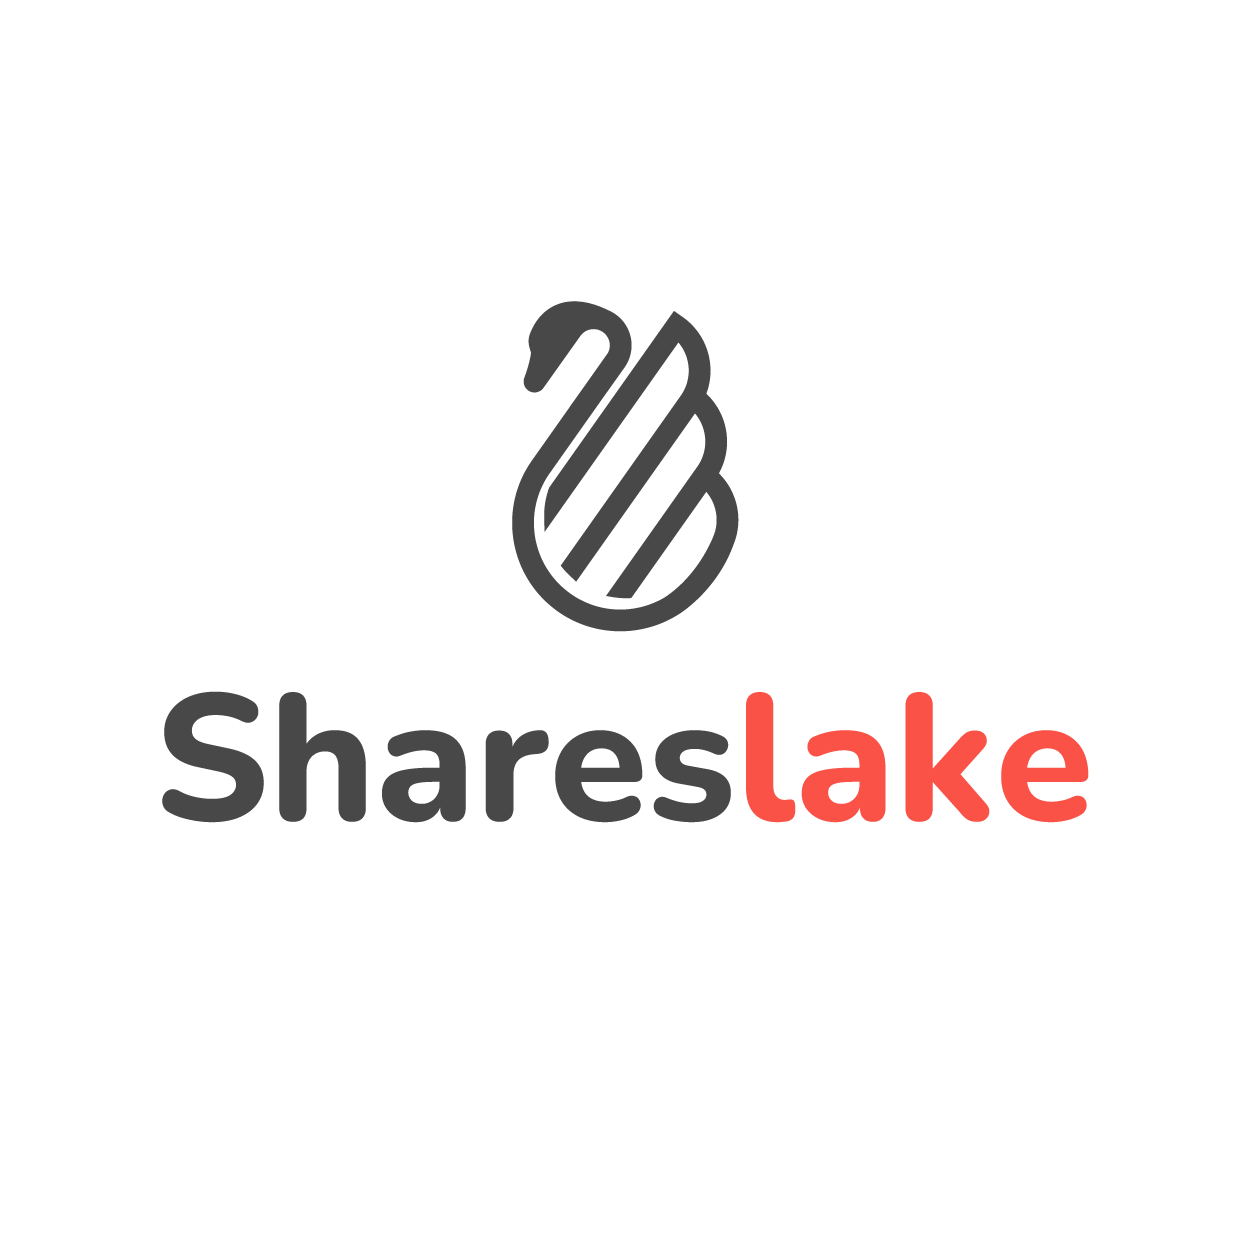 Shareslake logo